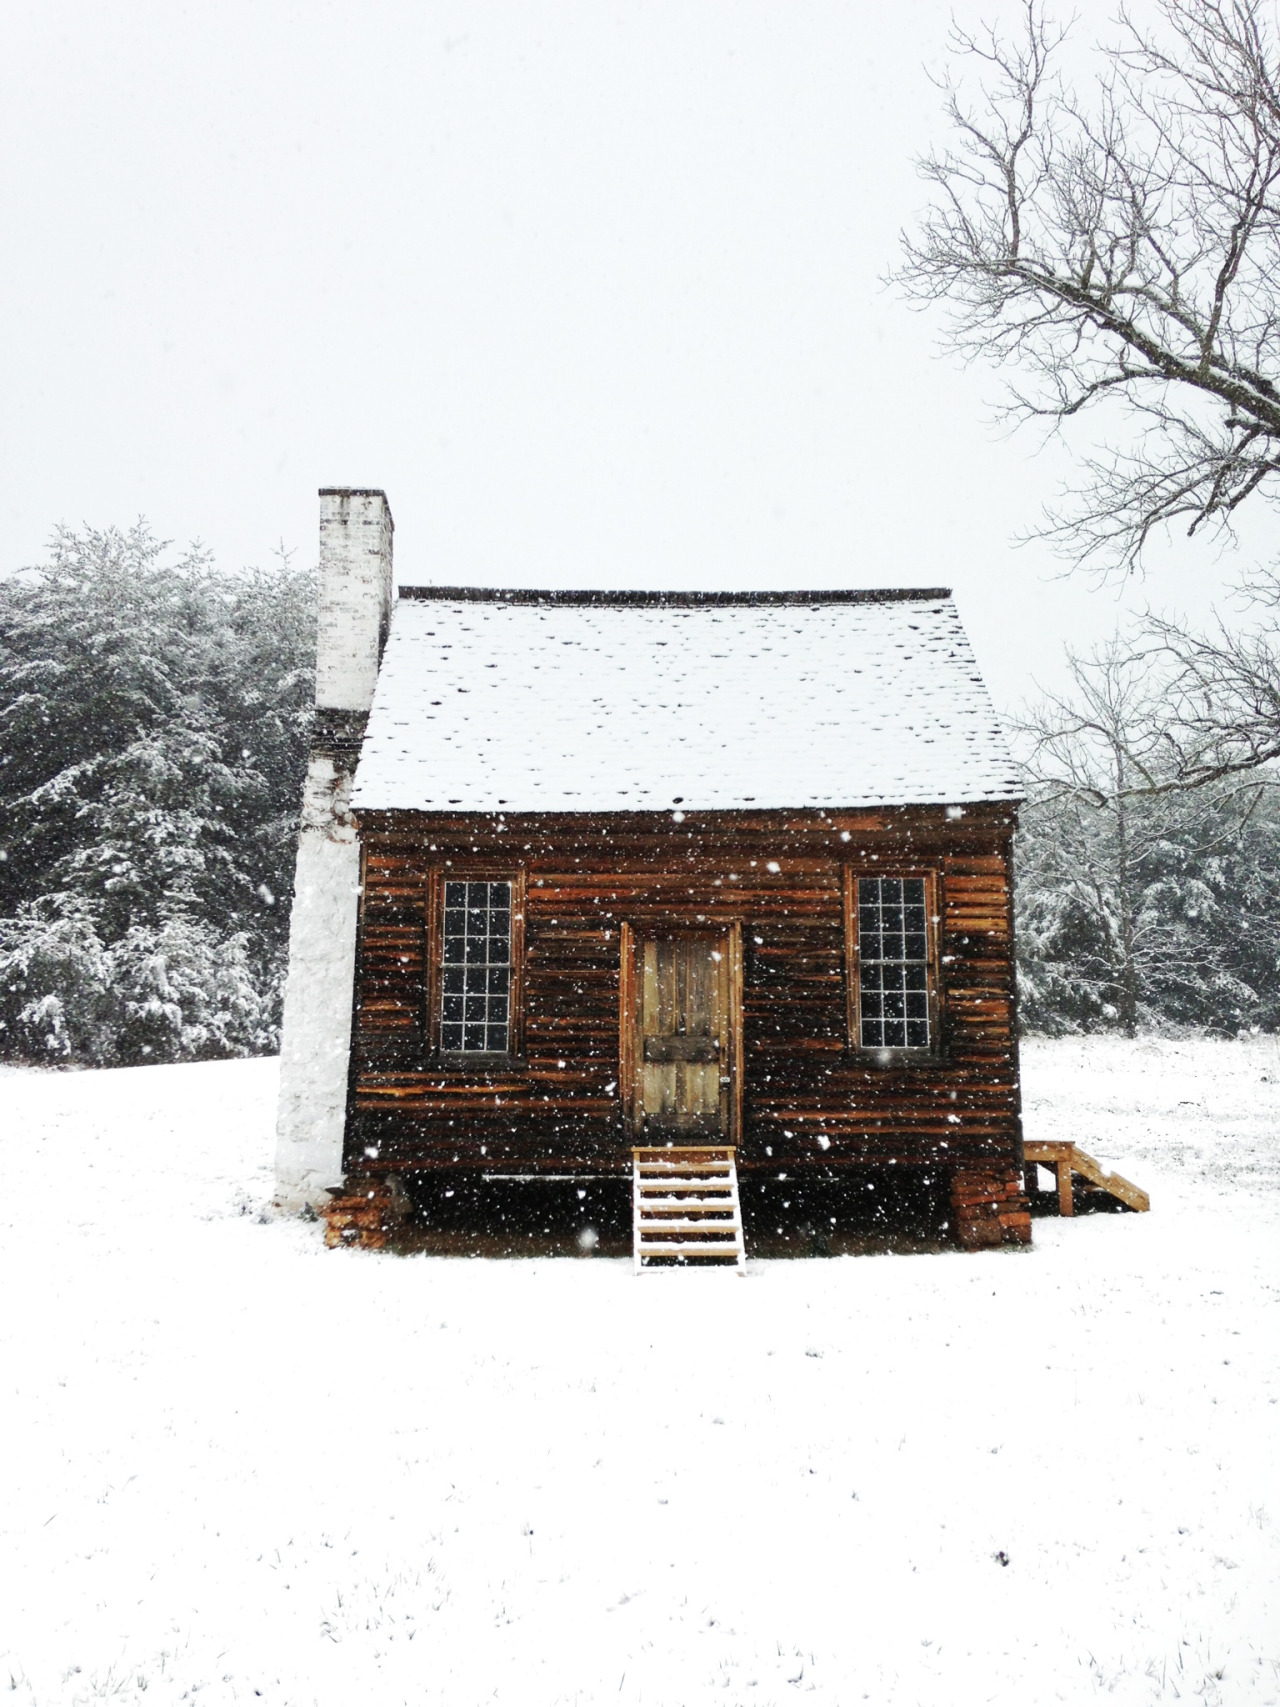 cozy cabin in the woods in winter